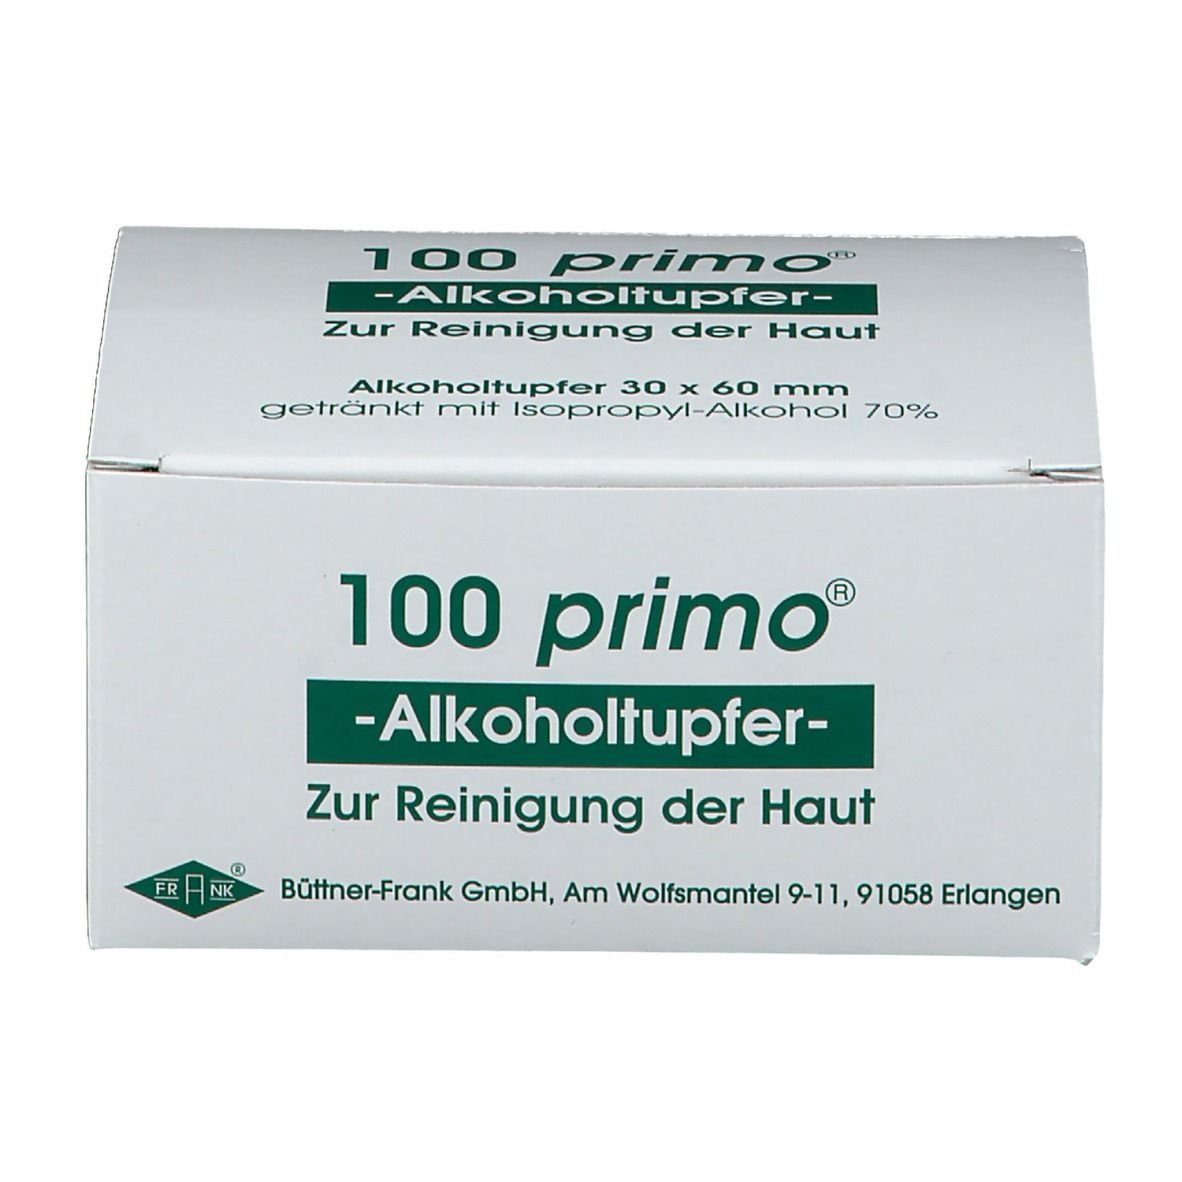 Primo® Alkoholtupfer